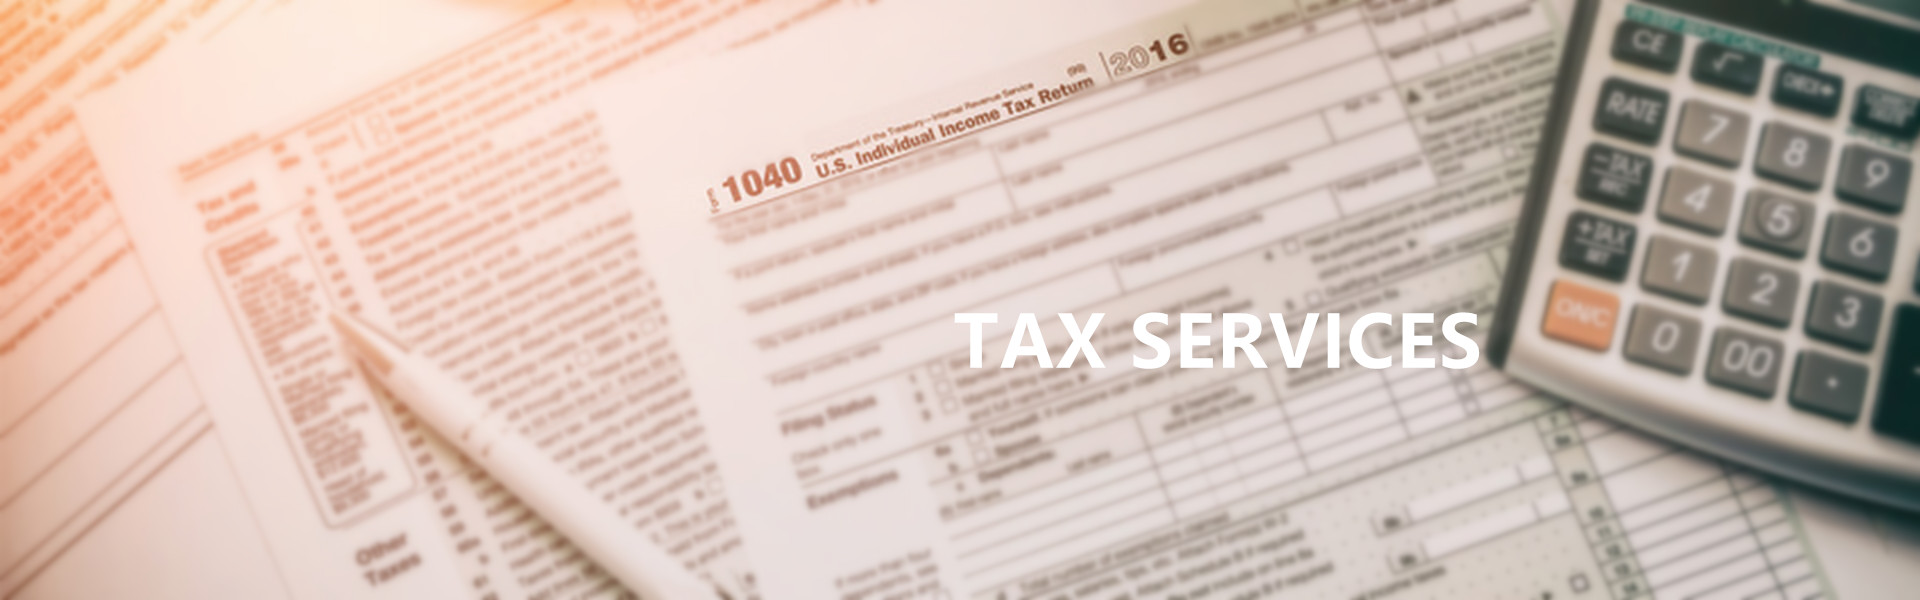 Tax Services-英文.jpg